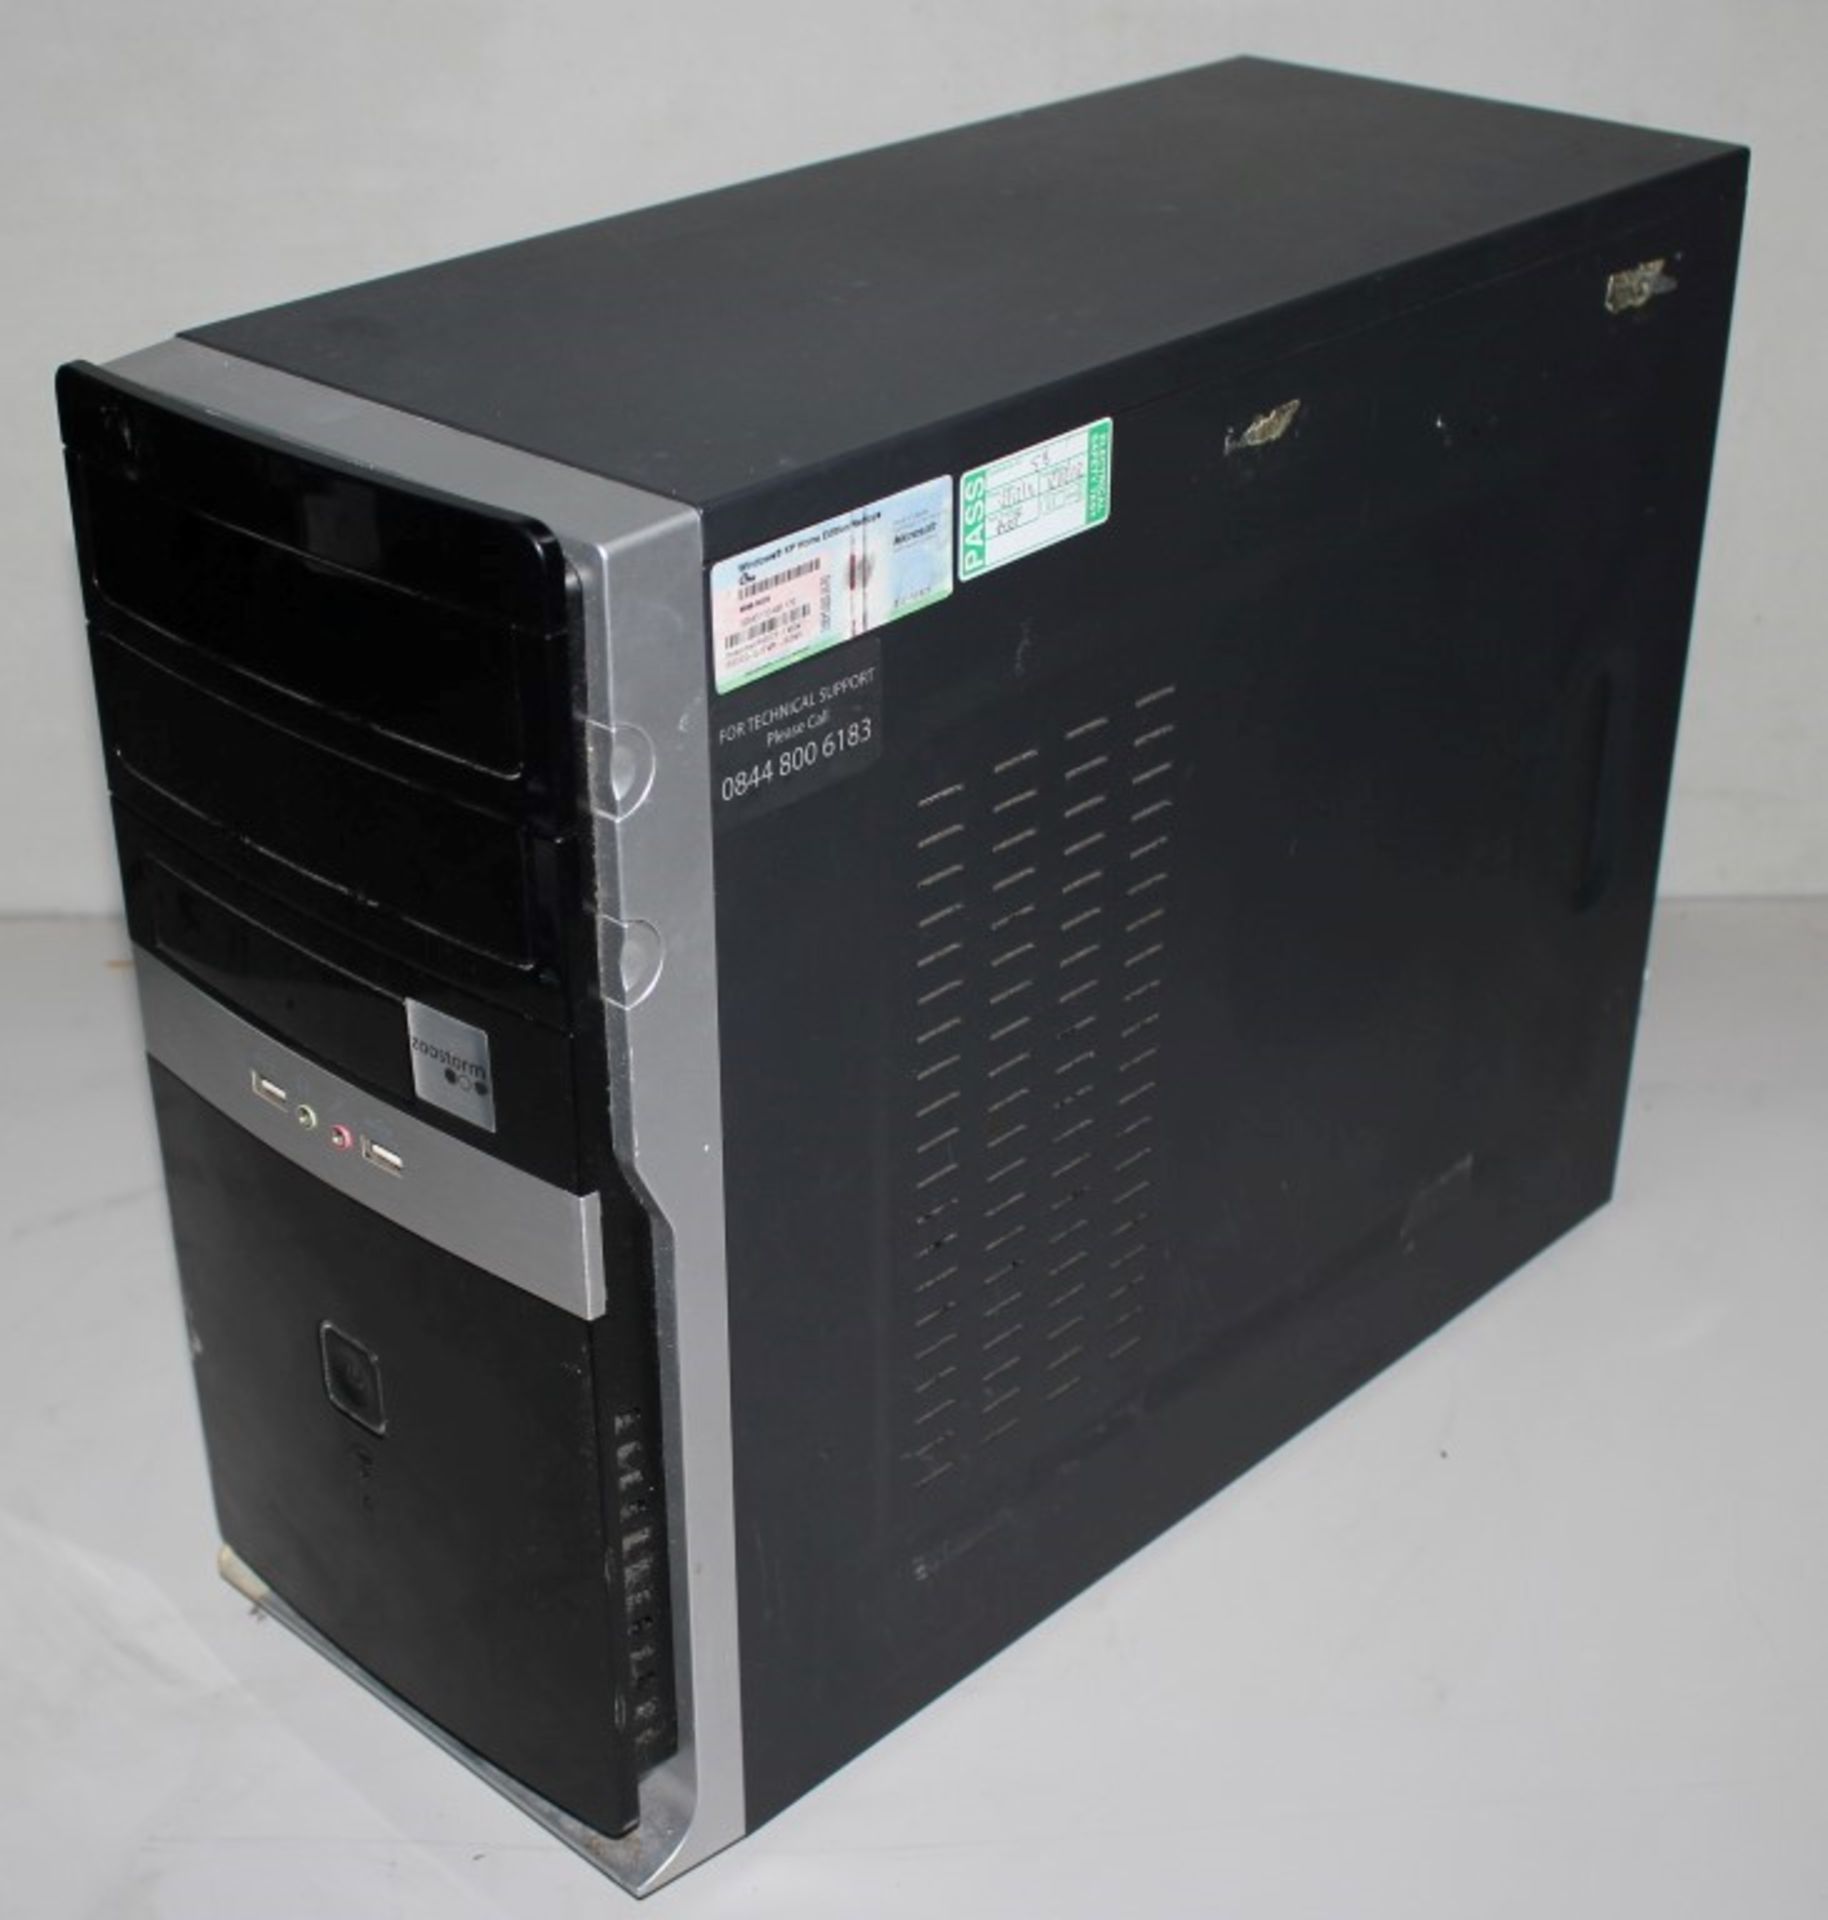 1 x Zoostorm Desktop Computer With Foxconn 45CS Mini-ITX Motherboard, Intel Atom 1.6ghz Processor,